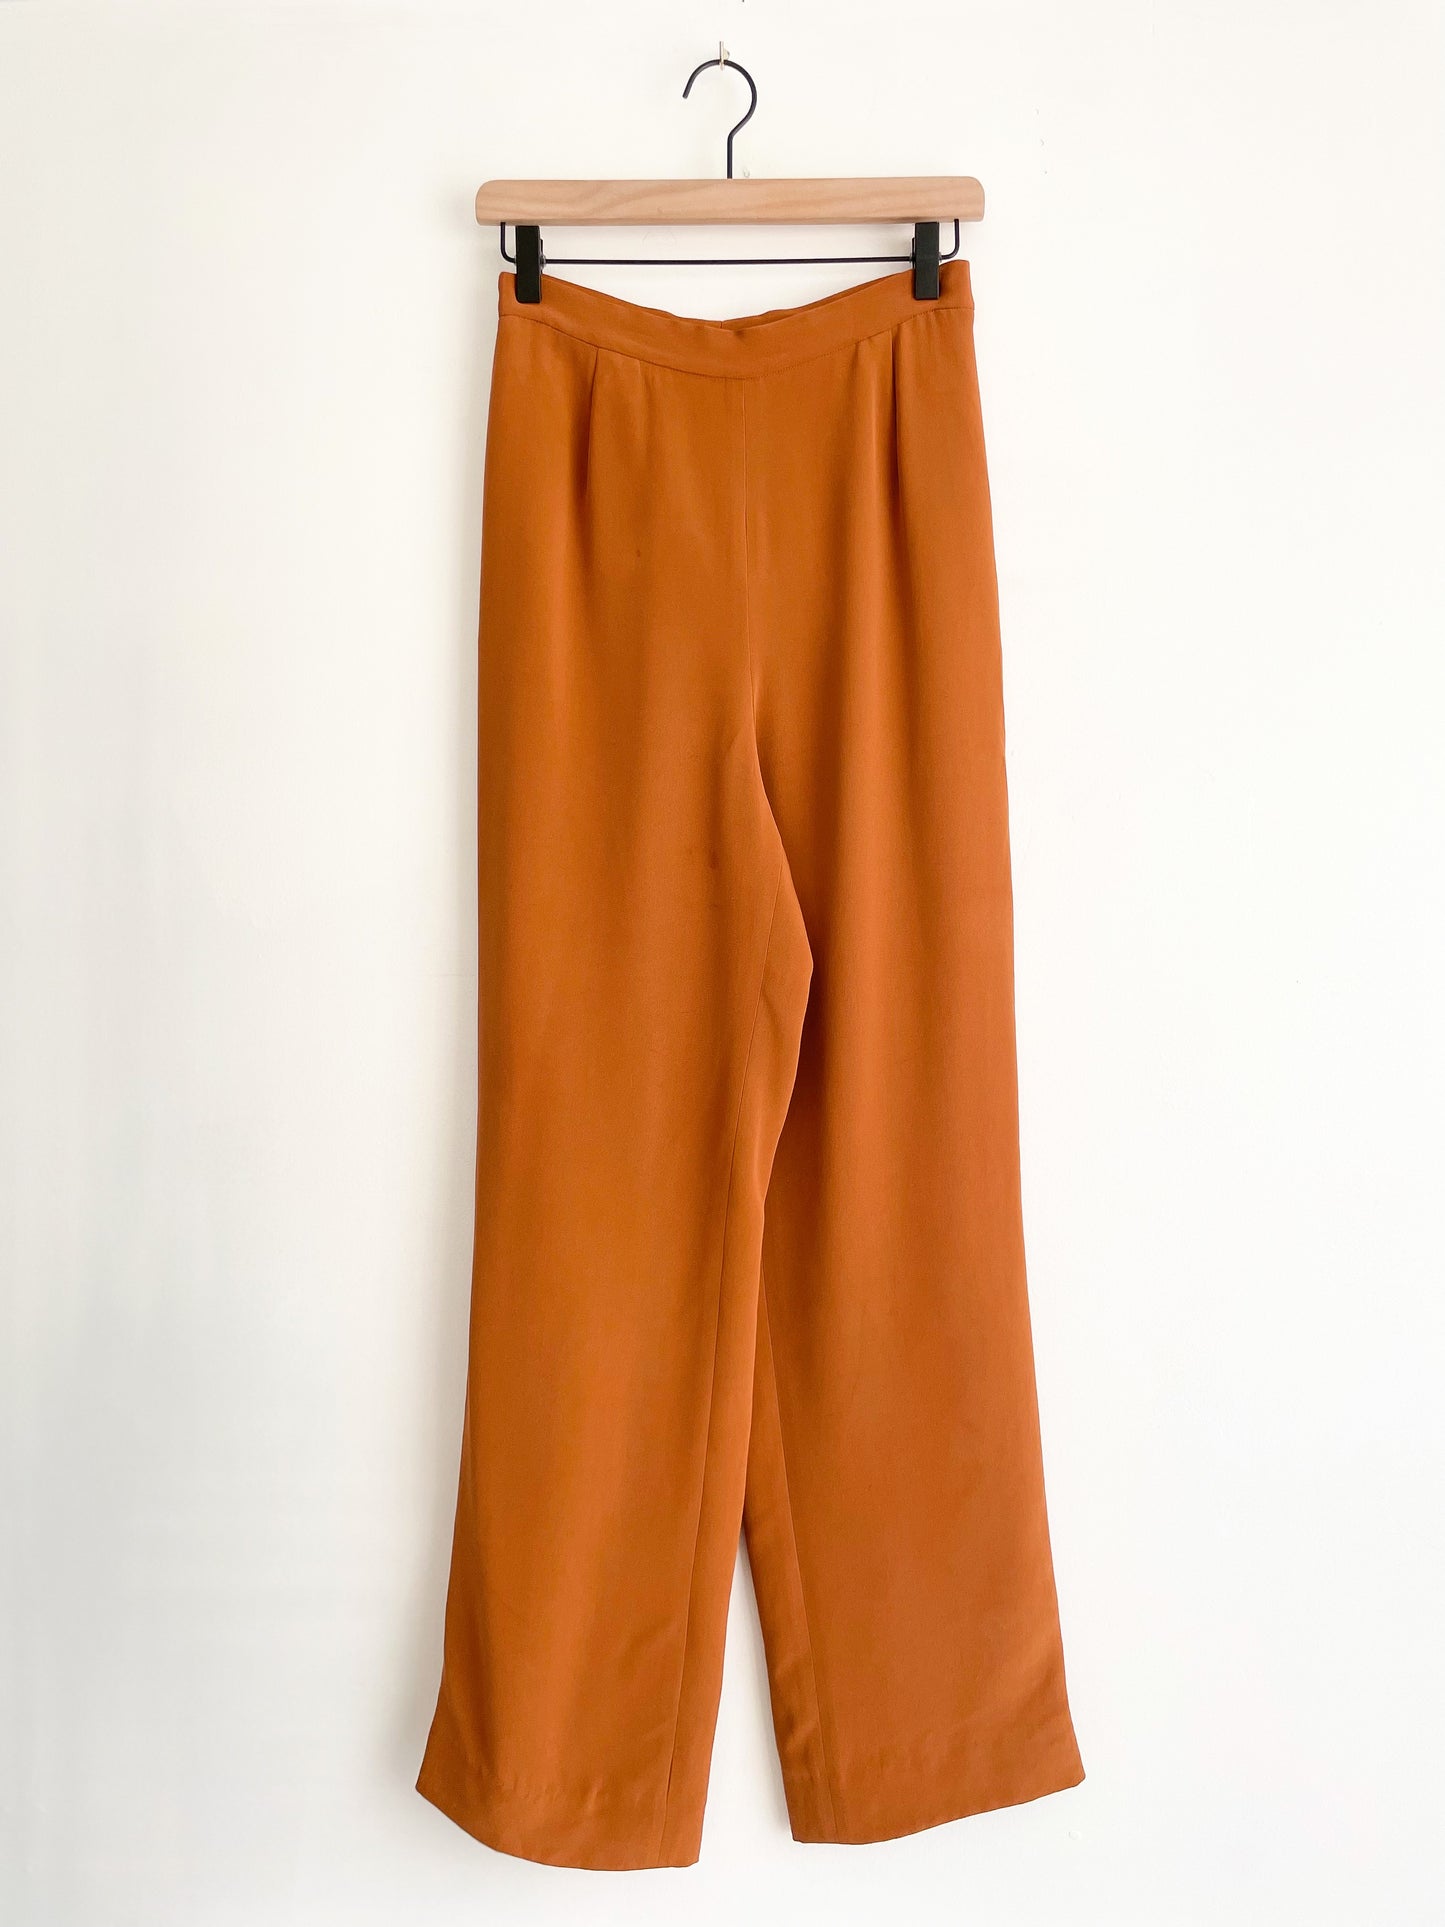 Rust Orange Silk Pants